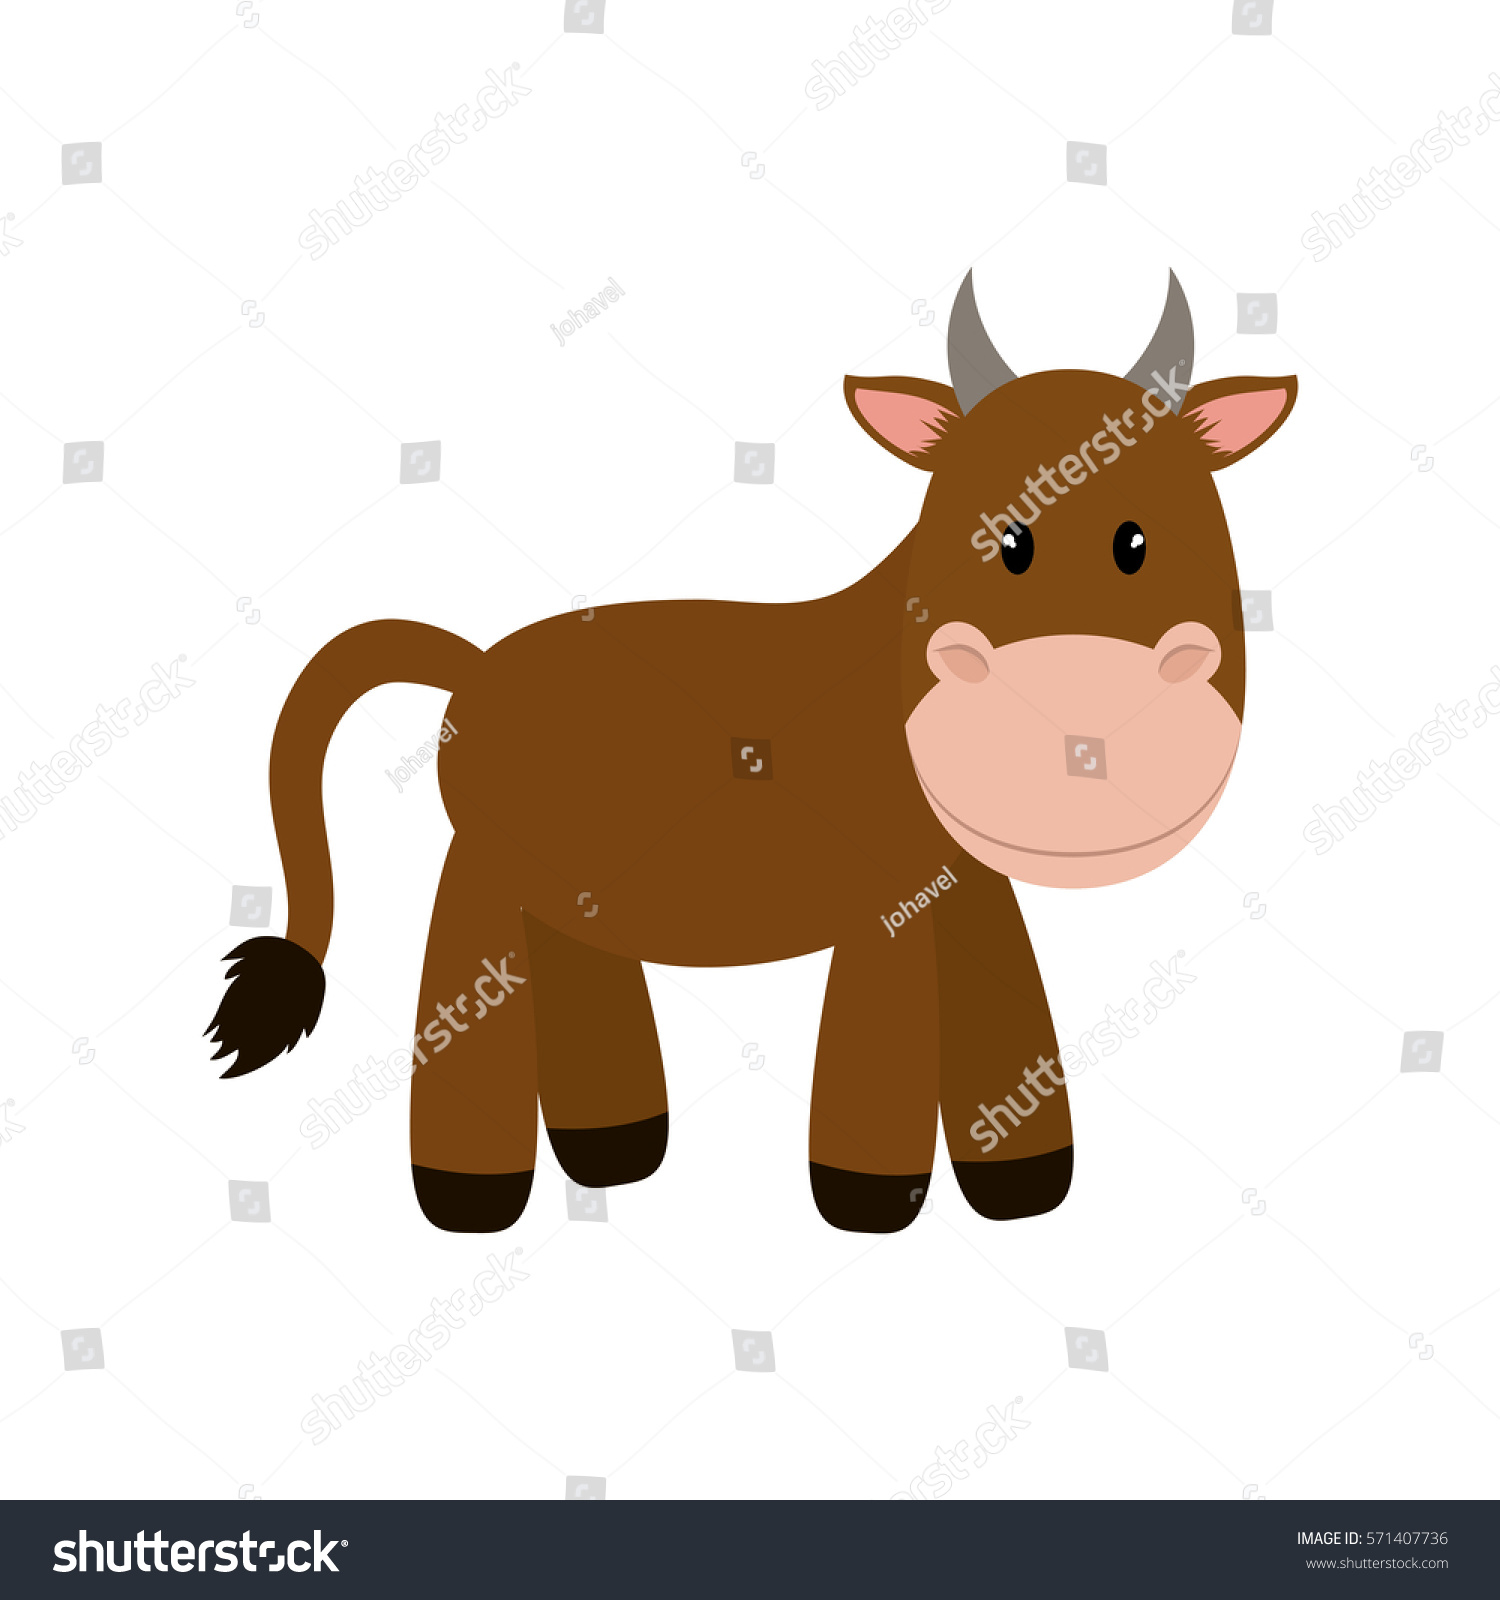 Cow animal cartoon icon vector illustration graphic design #571407736